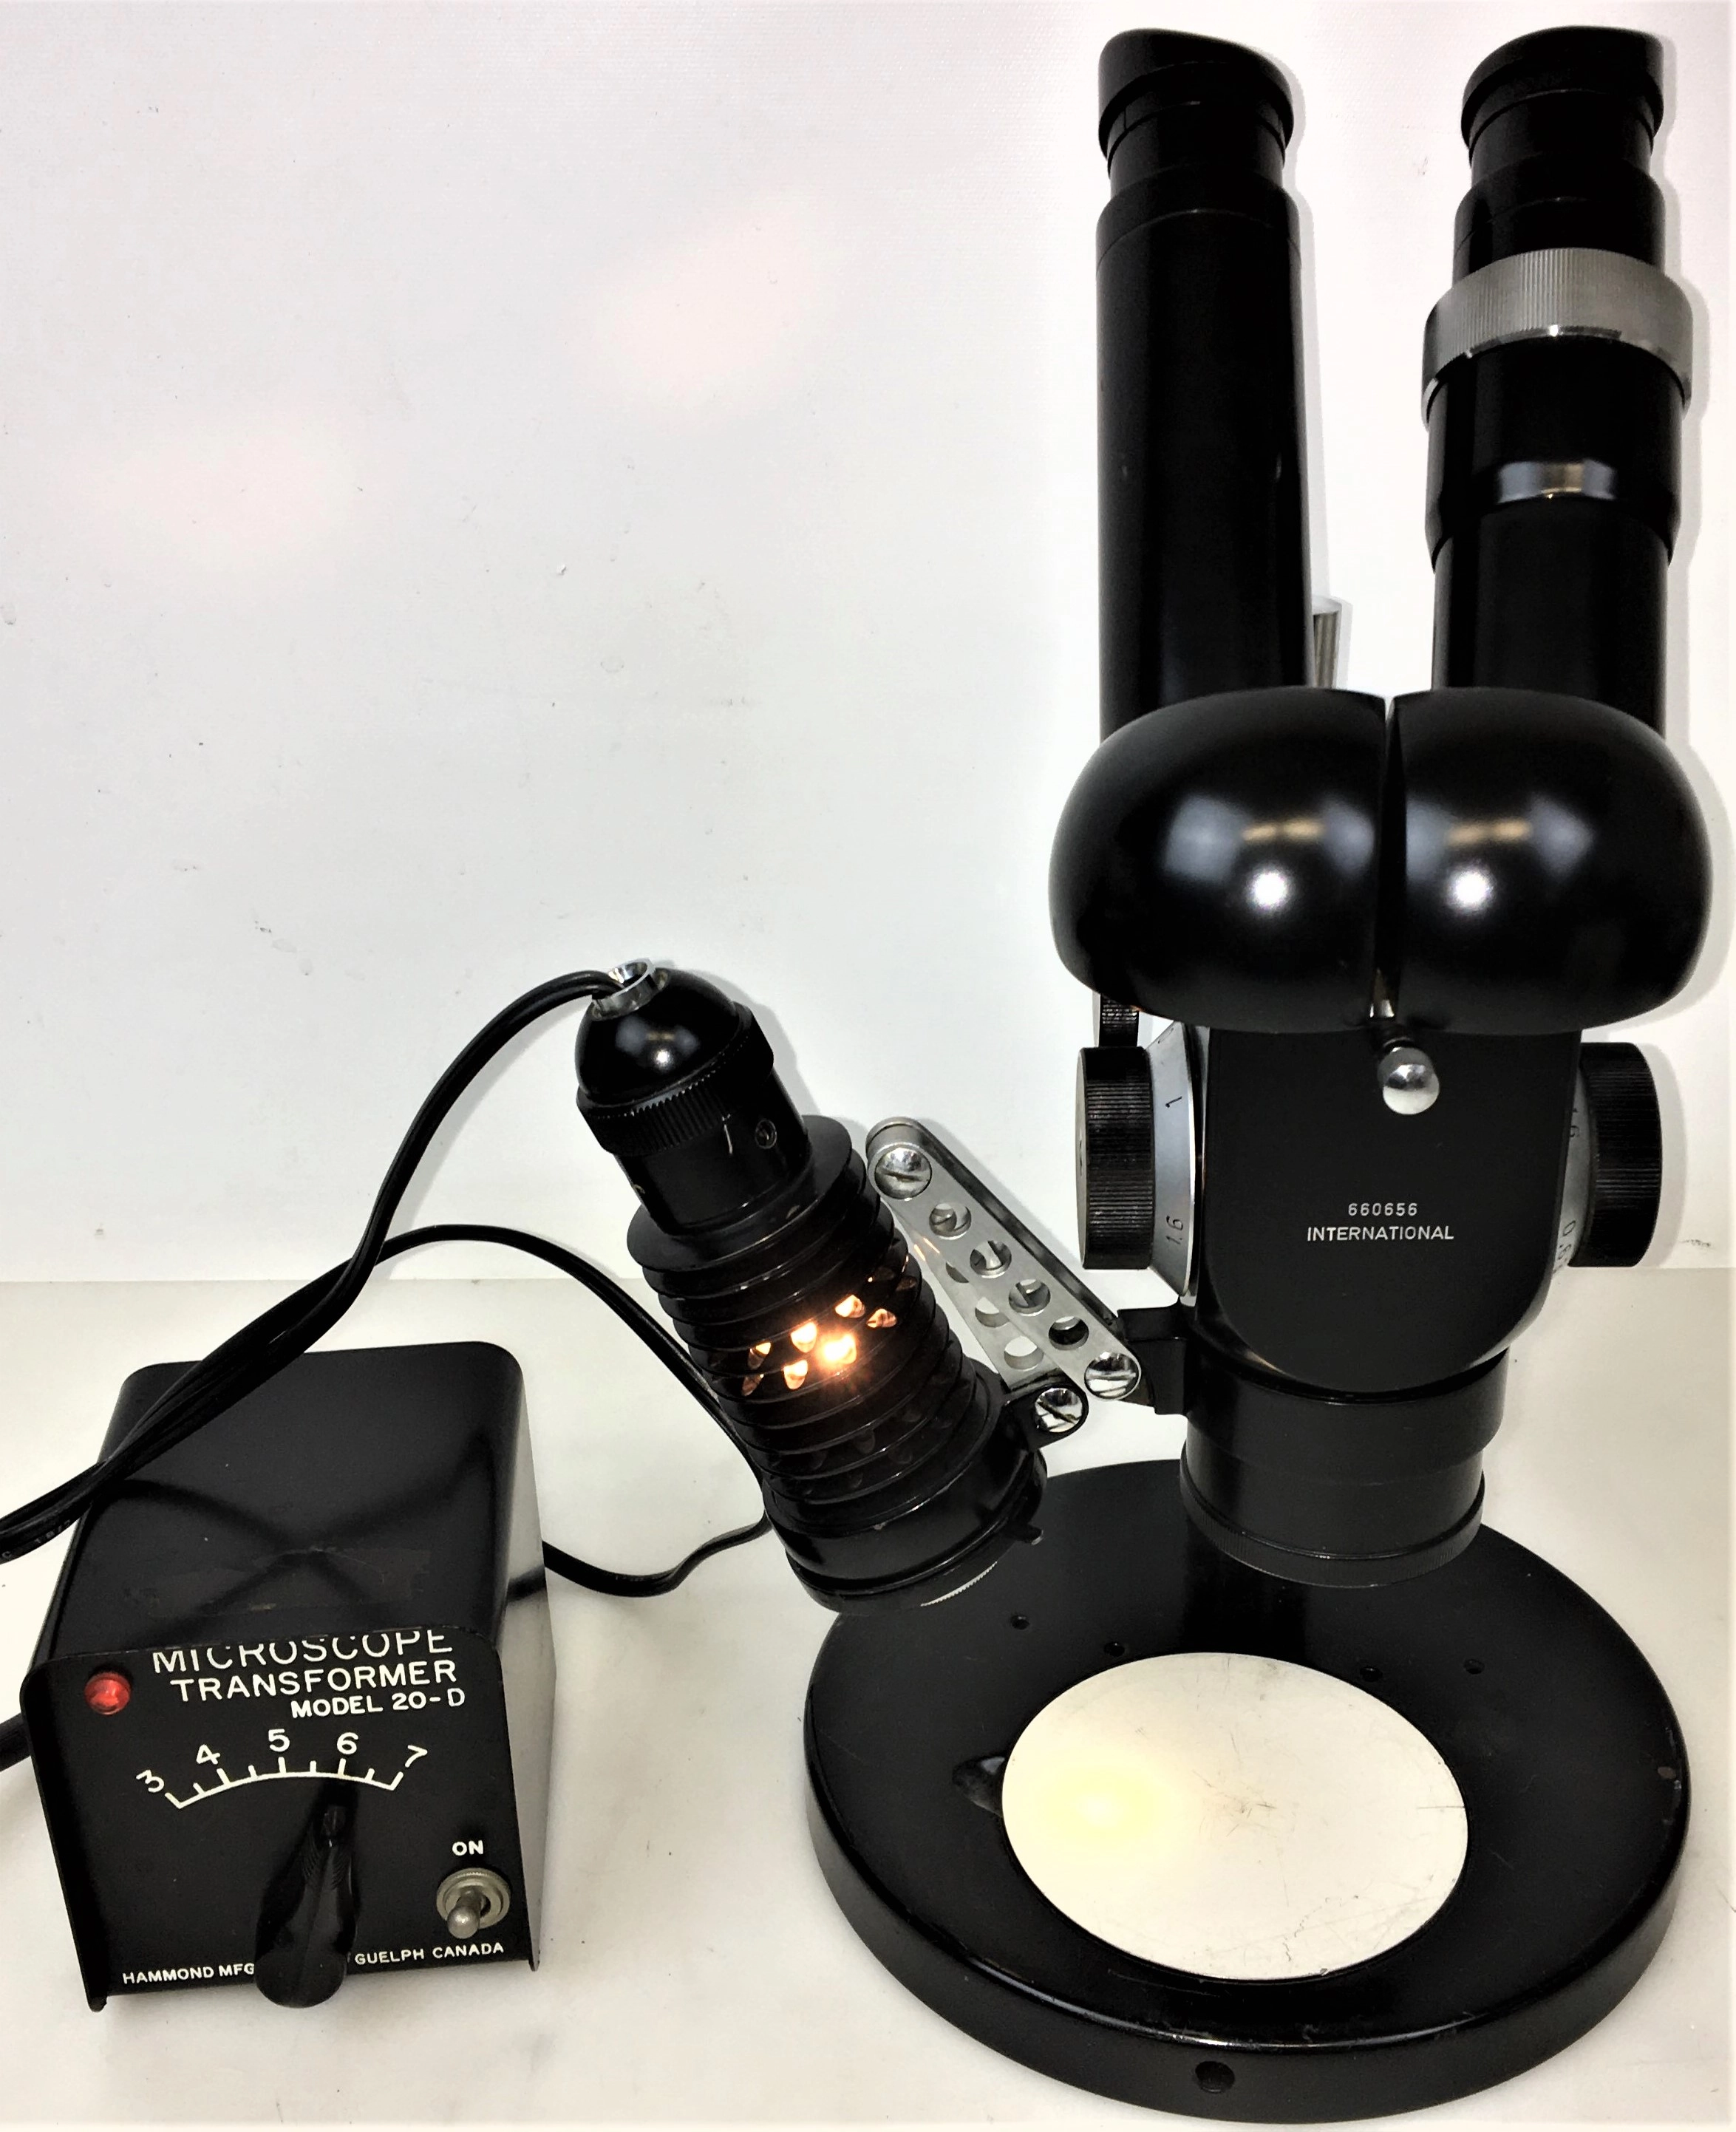 International Binocular Stereo Microscope with 20-D Transformer and Lamp -  4X to 25X